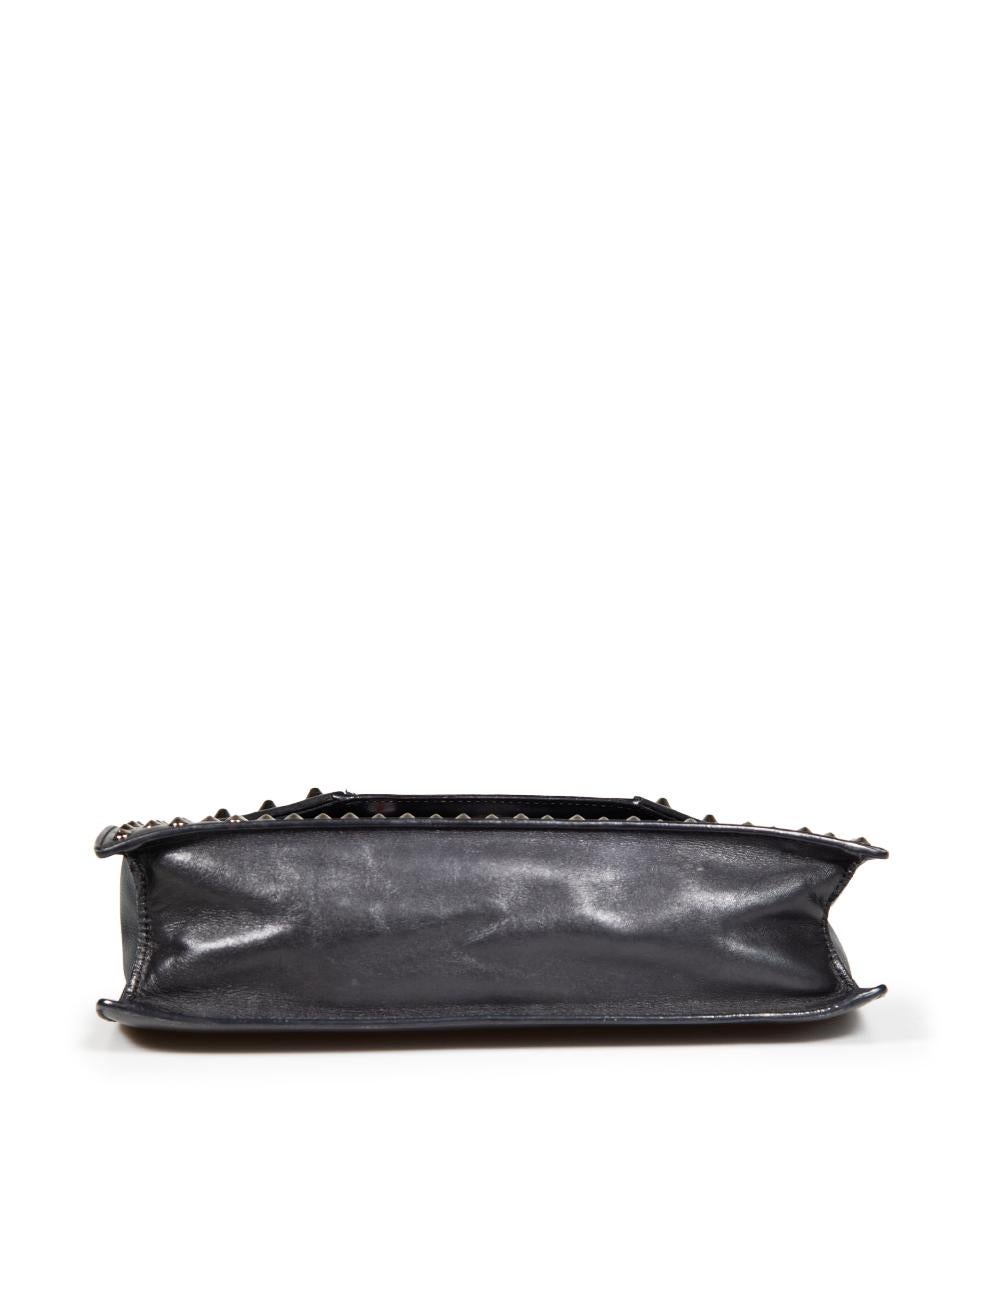 Women's Saint Laurent Black Leather Studded Betty Bag For Sale